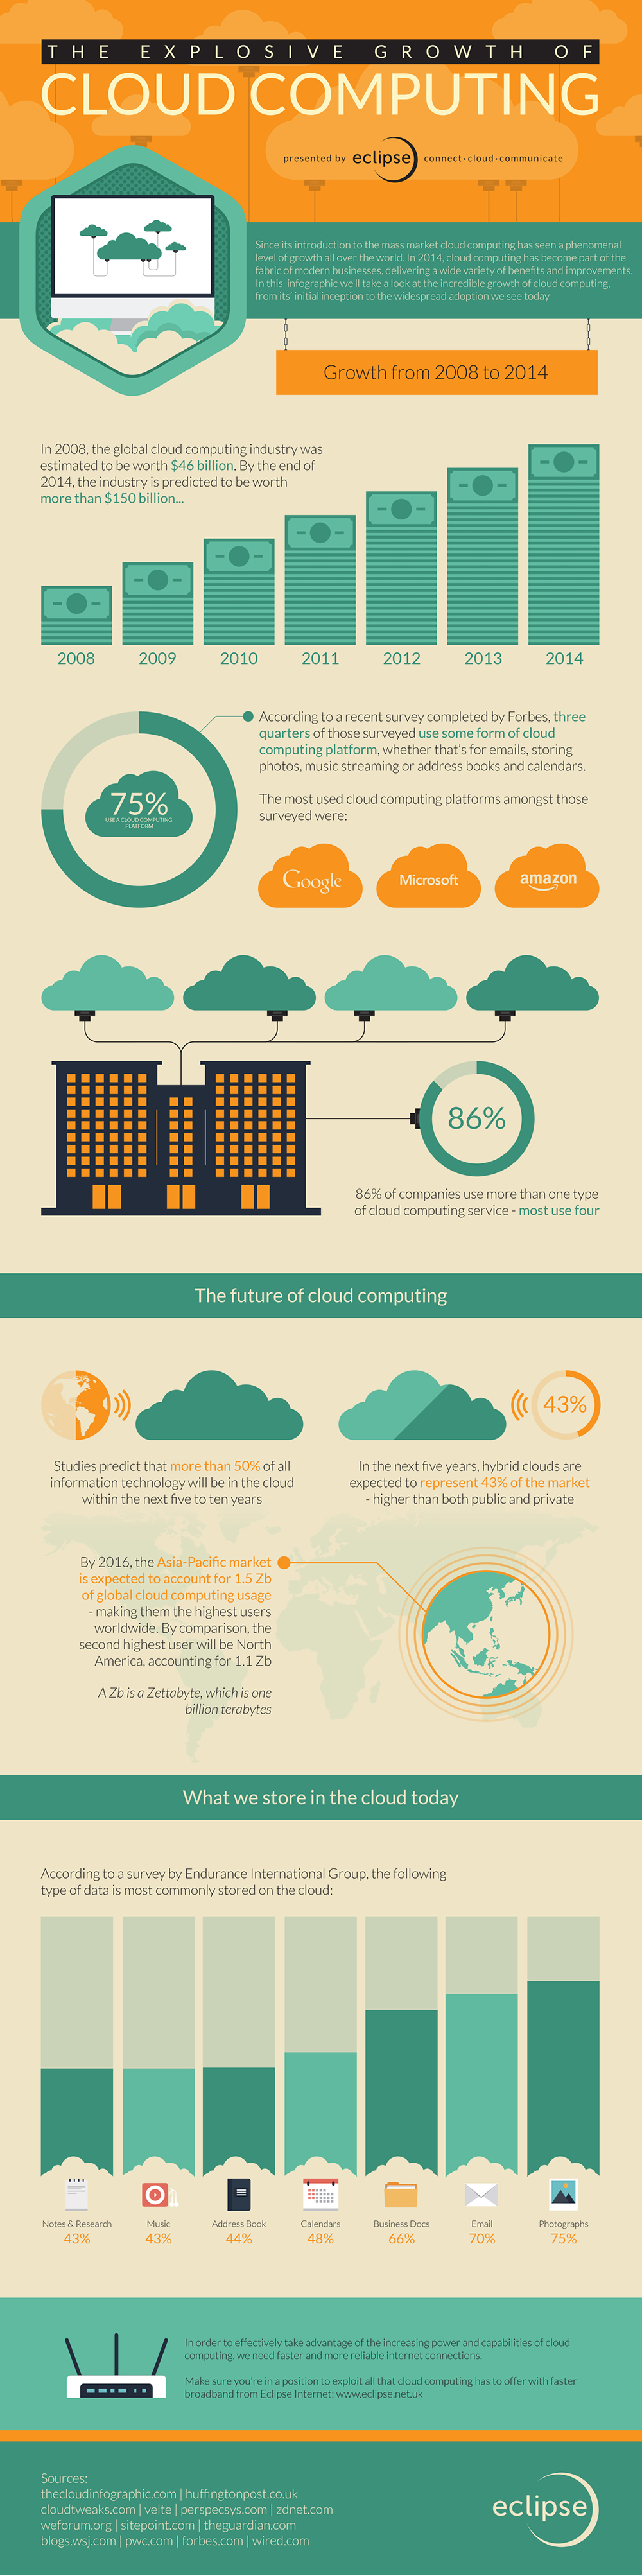 cloud computing statistics infographic